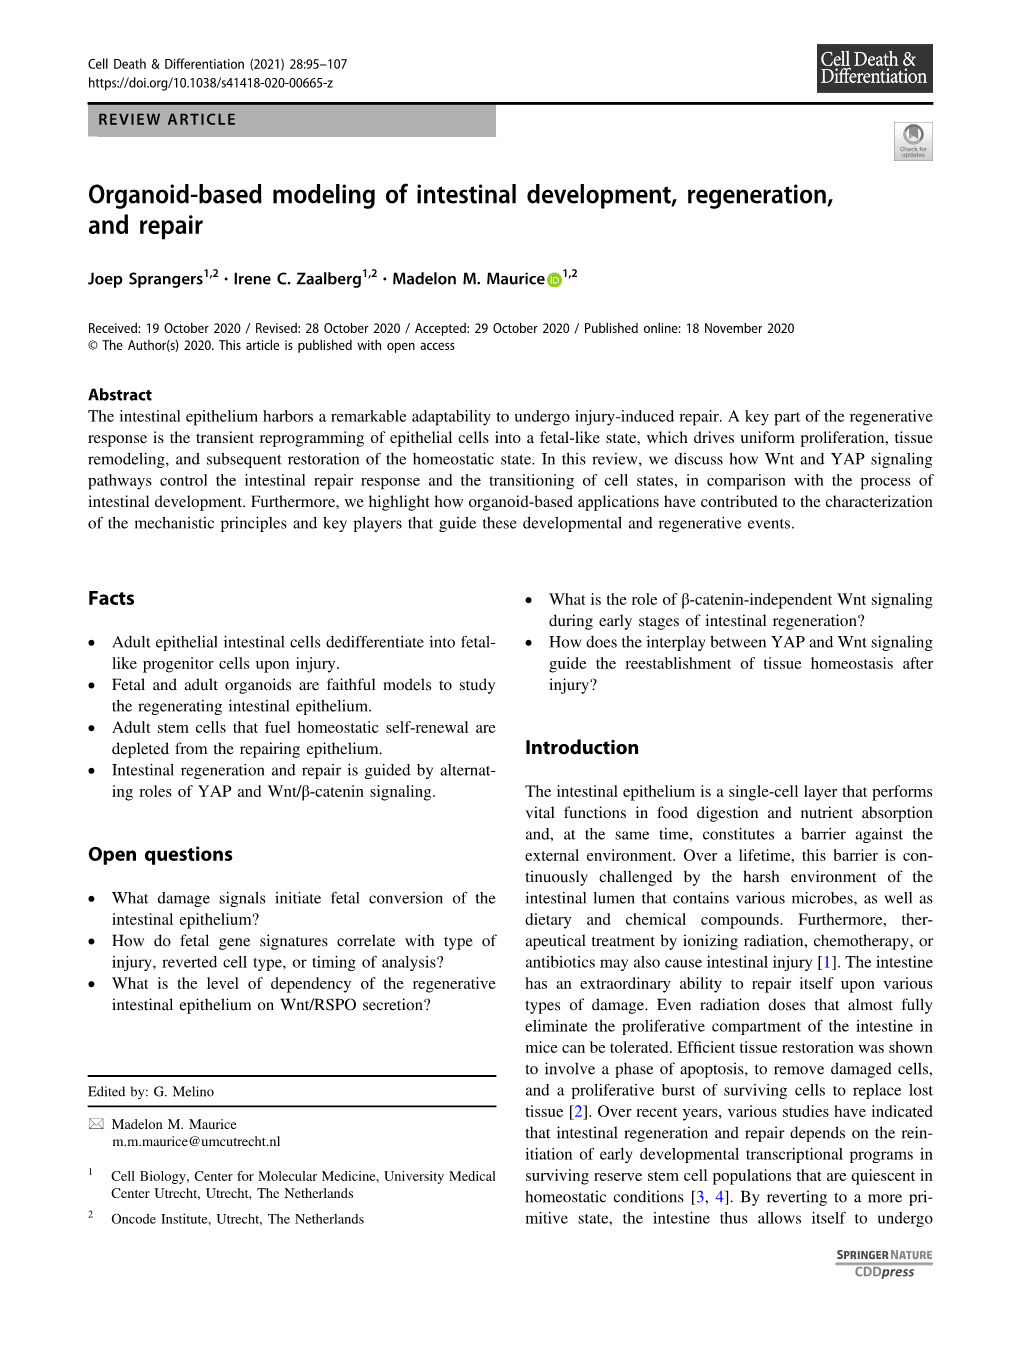 Organoid-Based Modeling of Intestinal Development, Regeneration, and Repair